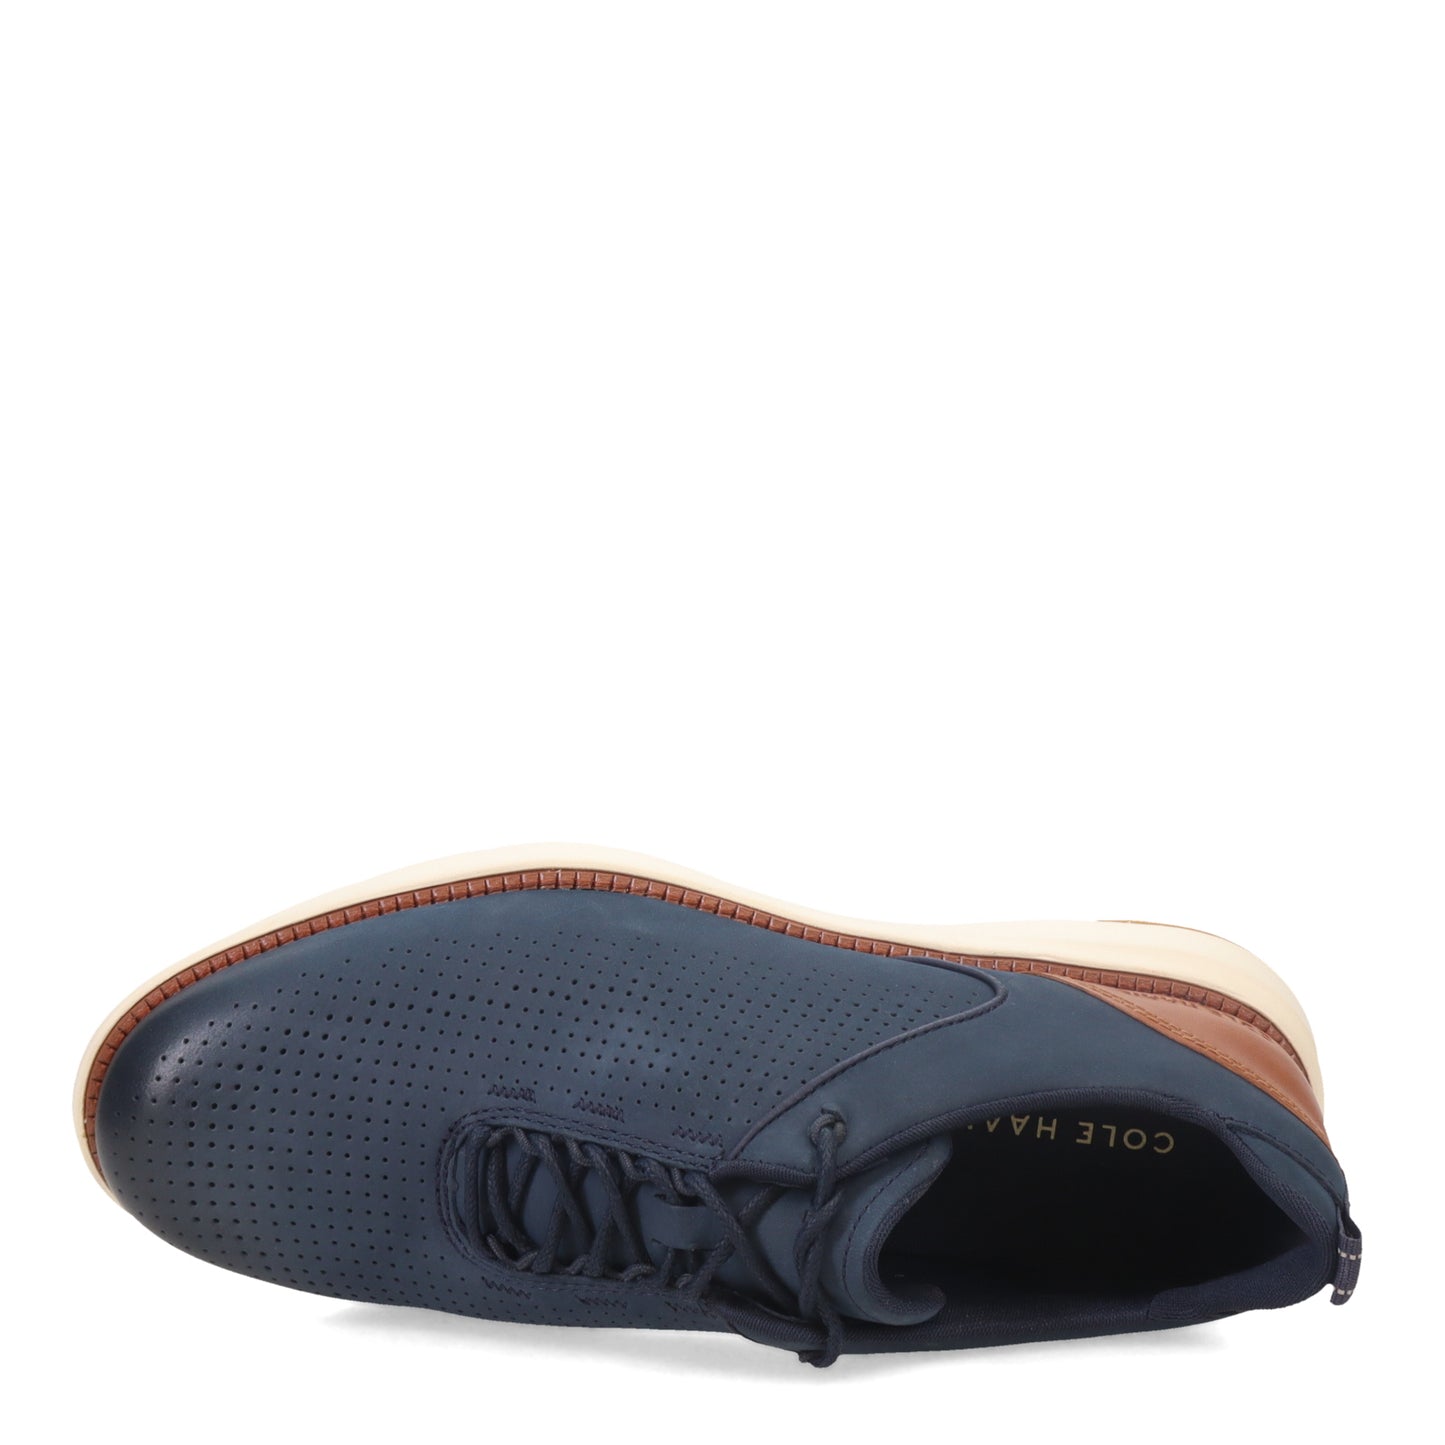 Peltz Shoes  Men's Cole Haan Grand Atlantic TXT Sneaker Navy C38306 COH